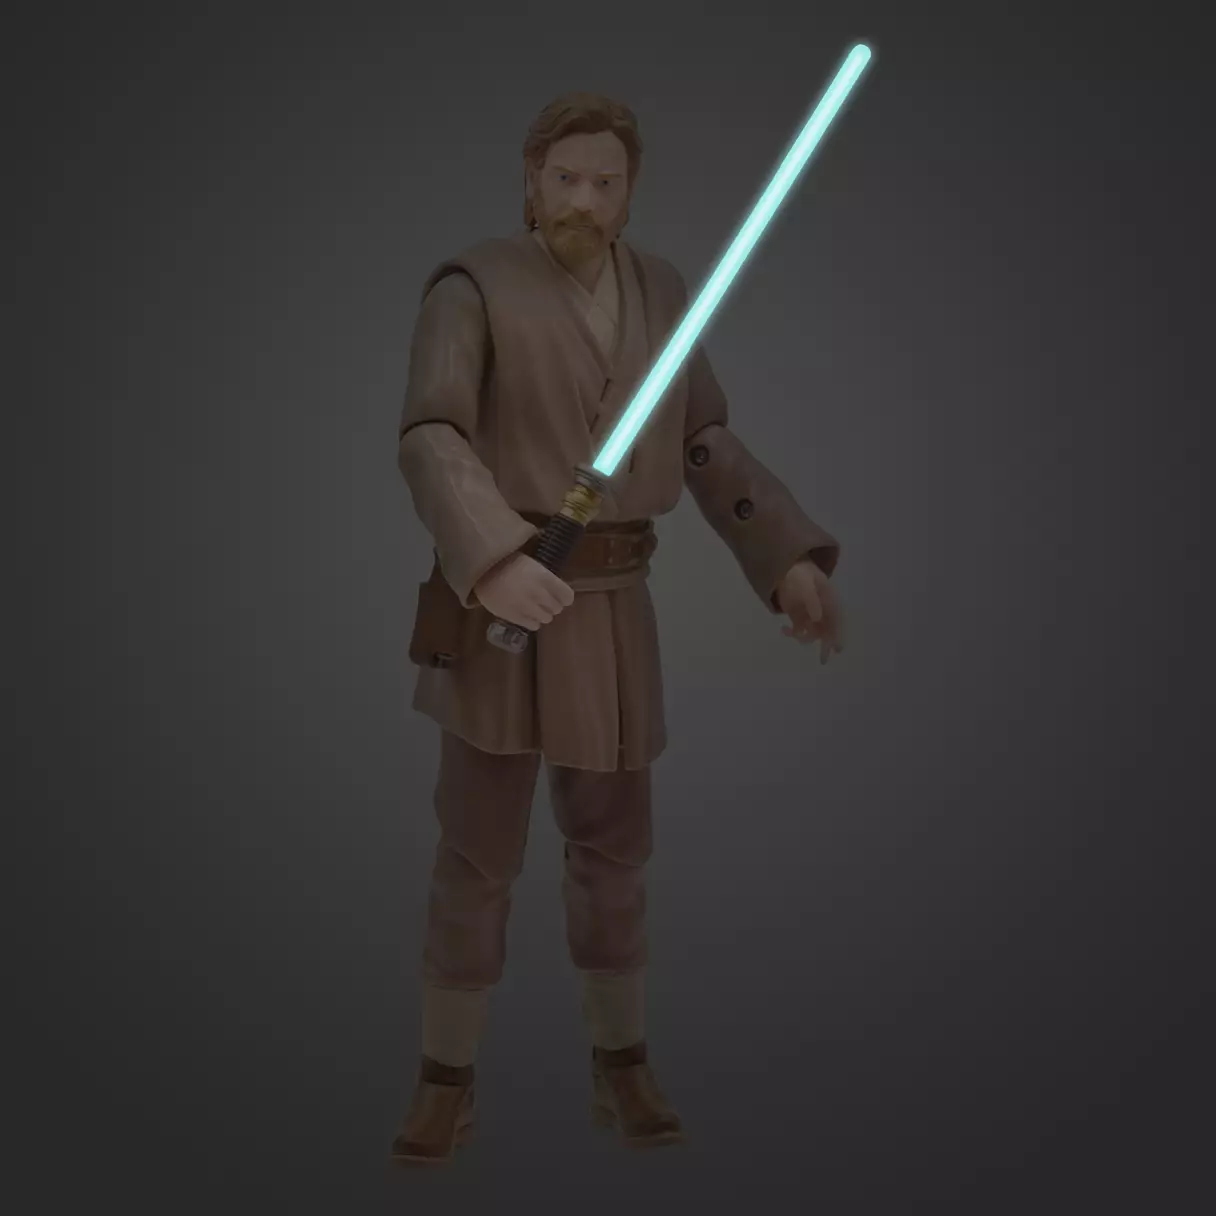 OWK Obi-Wan (Ben) Kenobi Talking Figure 4